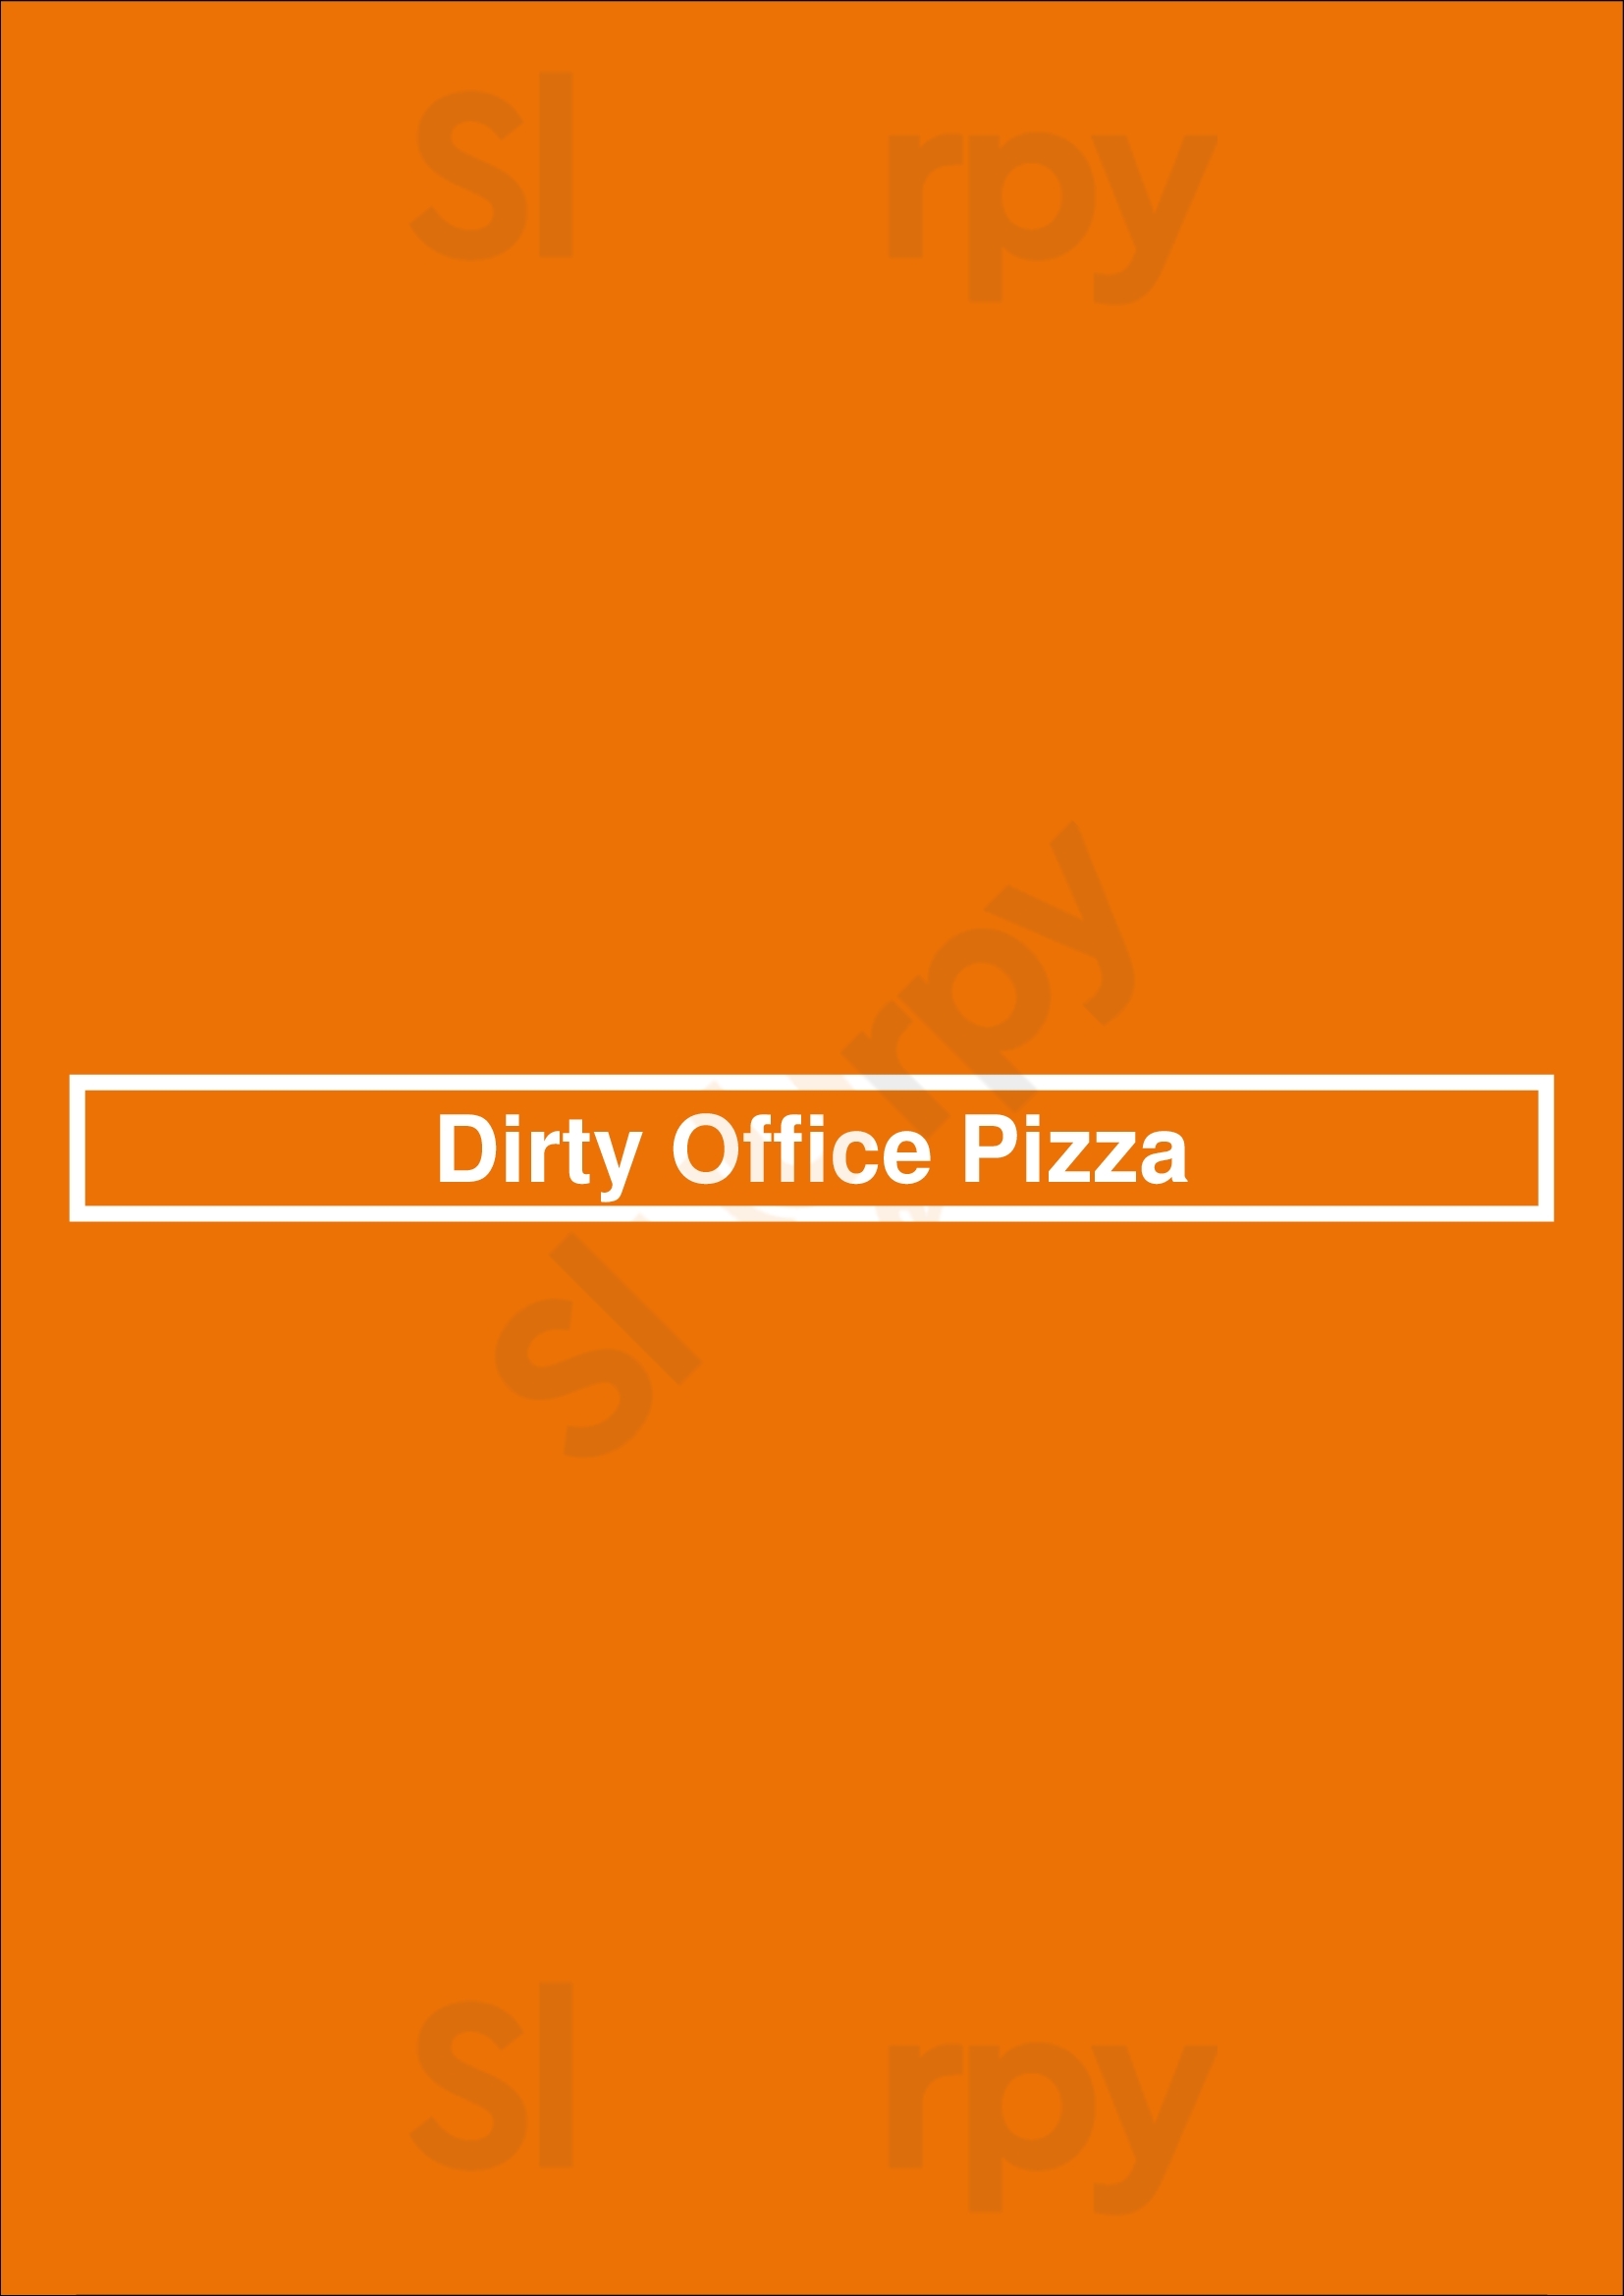 Dirty Office Pizza Barcelona Menu - 1